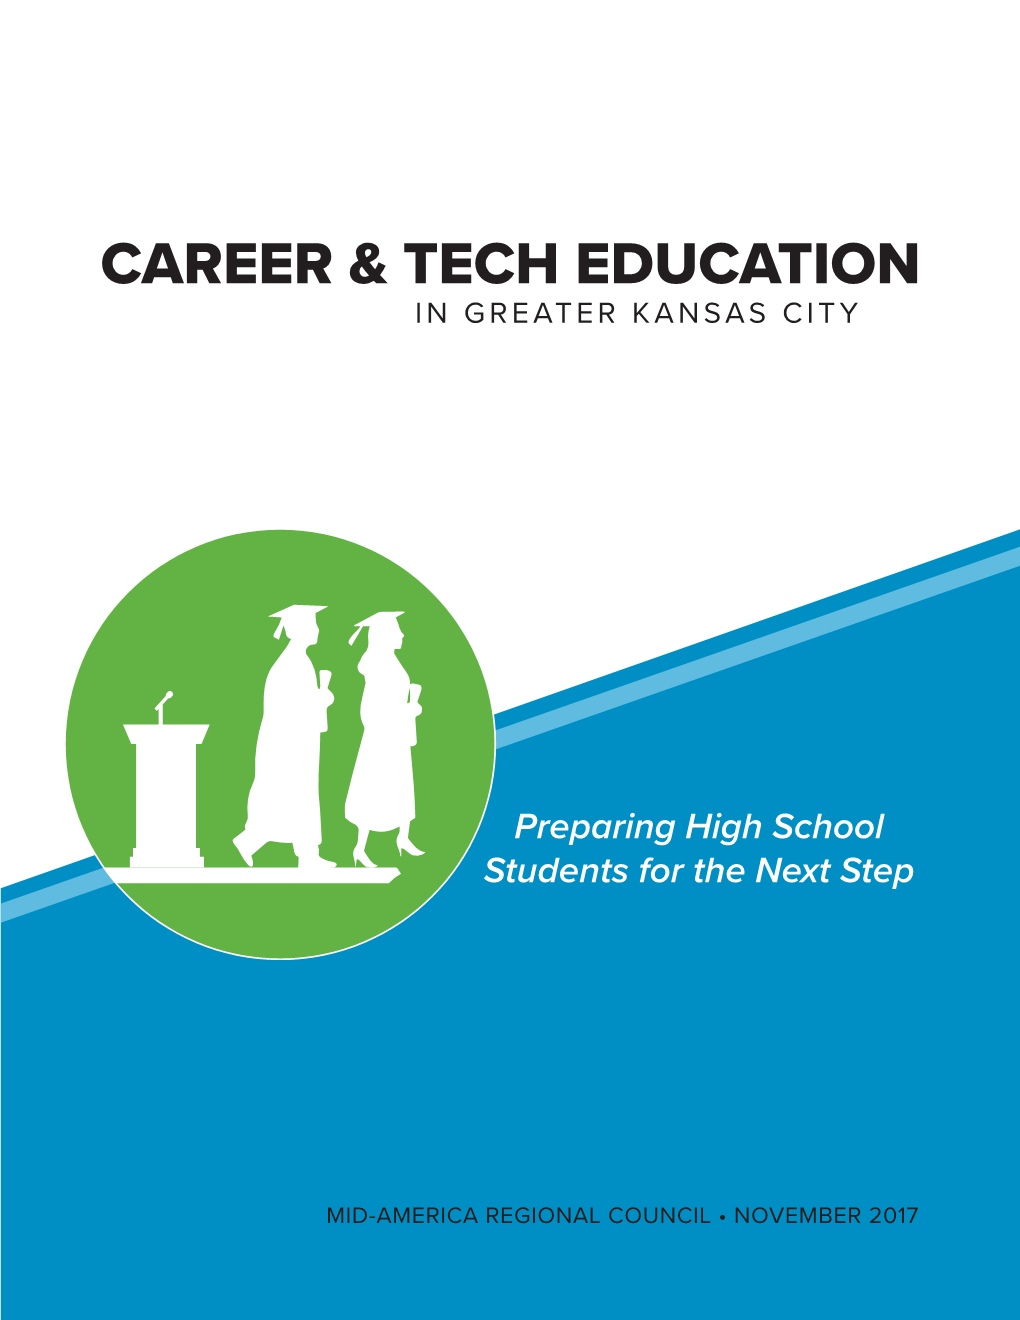 Career & Tech Education